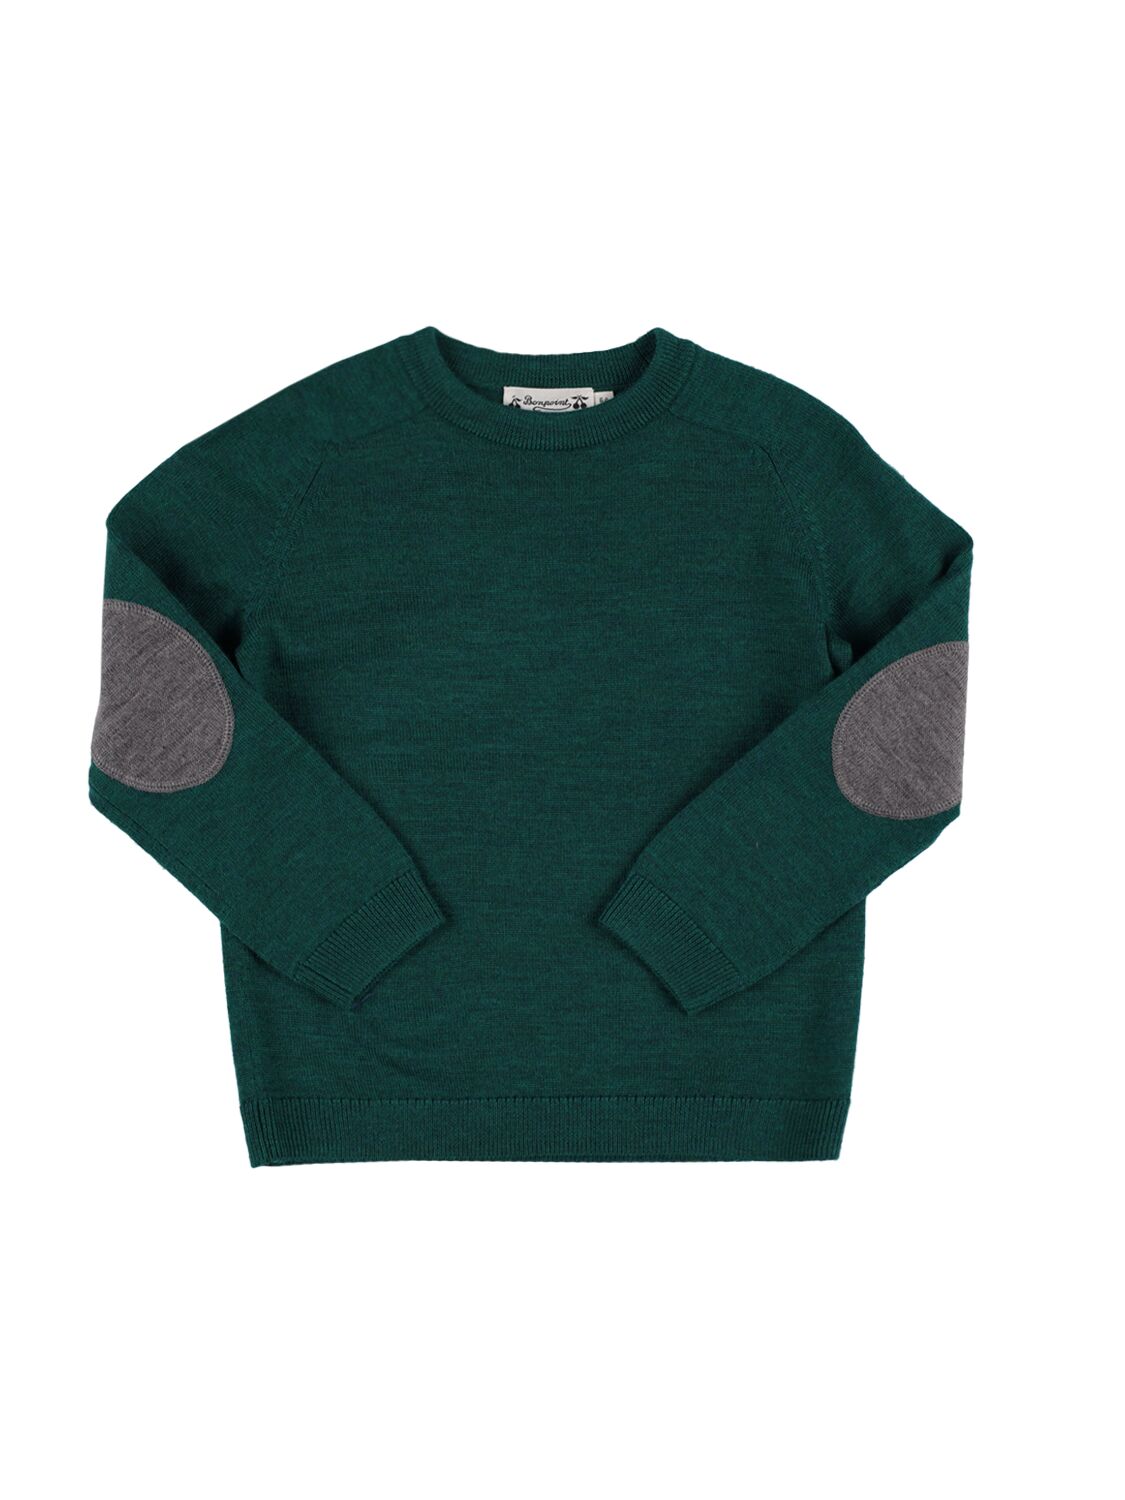 Image of Bowen Wool Sweater